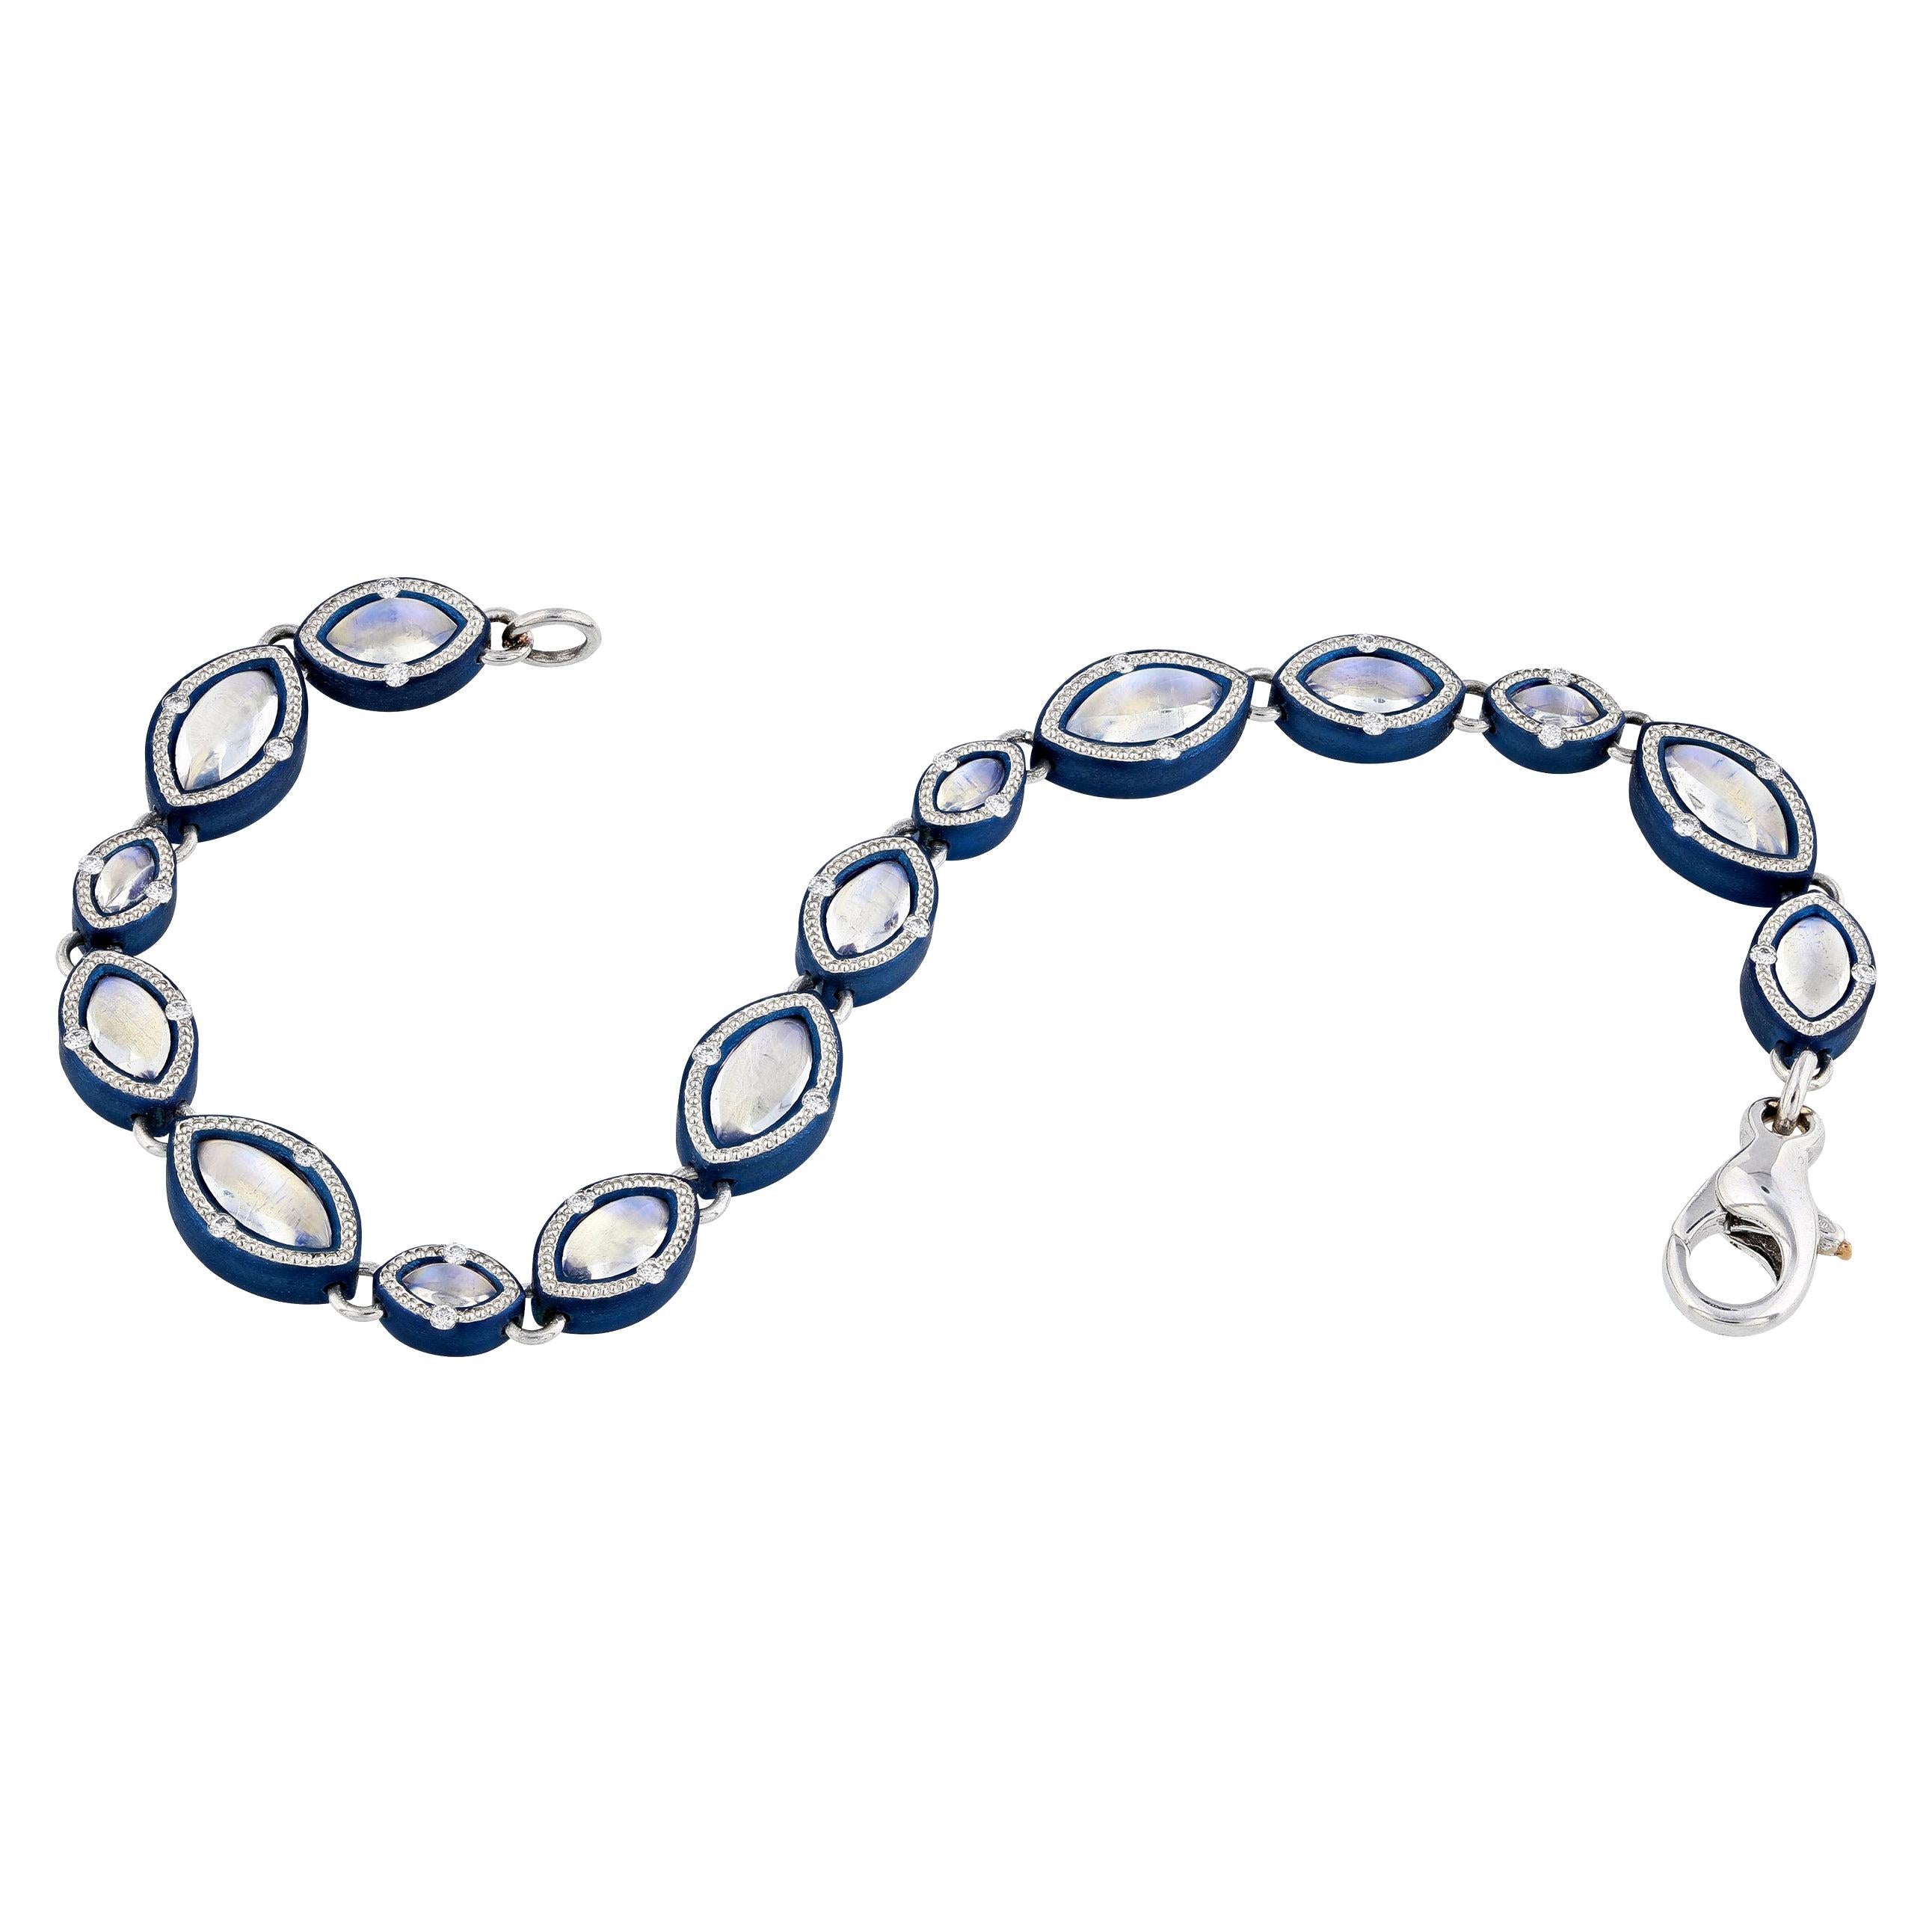 Marquise Moonstone Bracelet in Blue Zirconium by Zoltan David For Sale